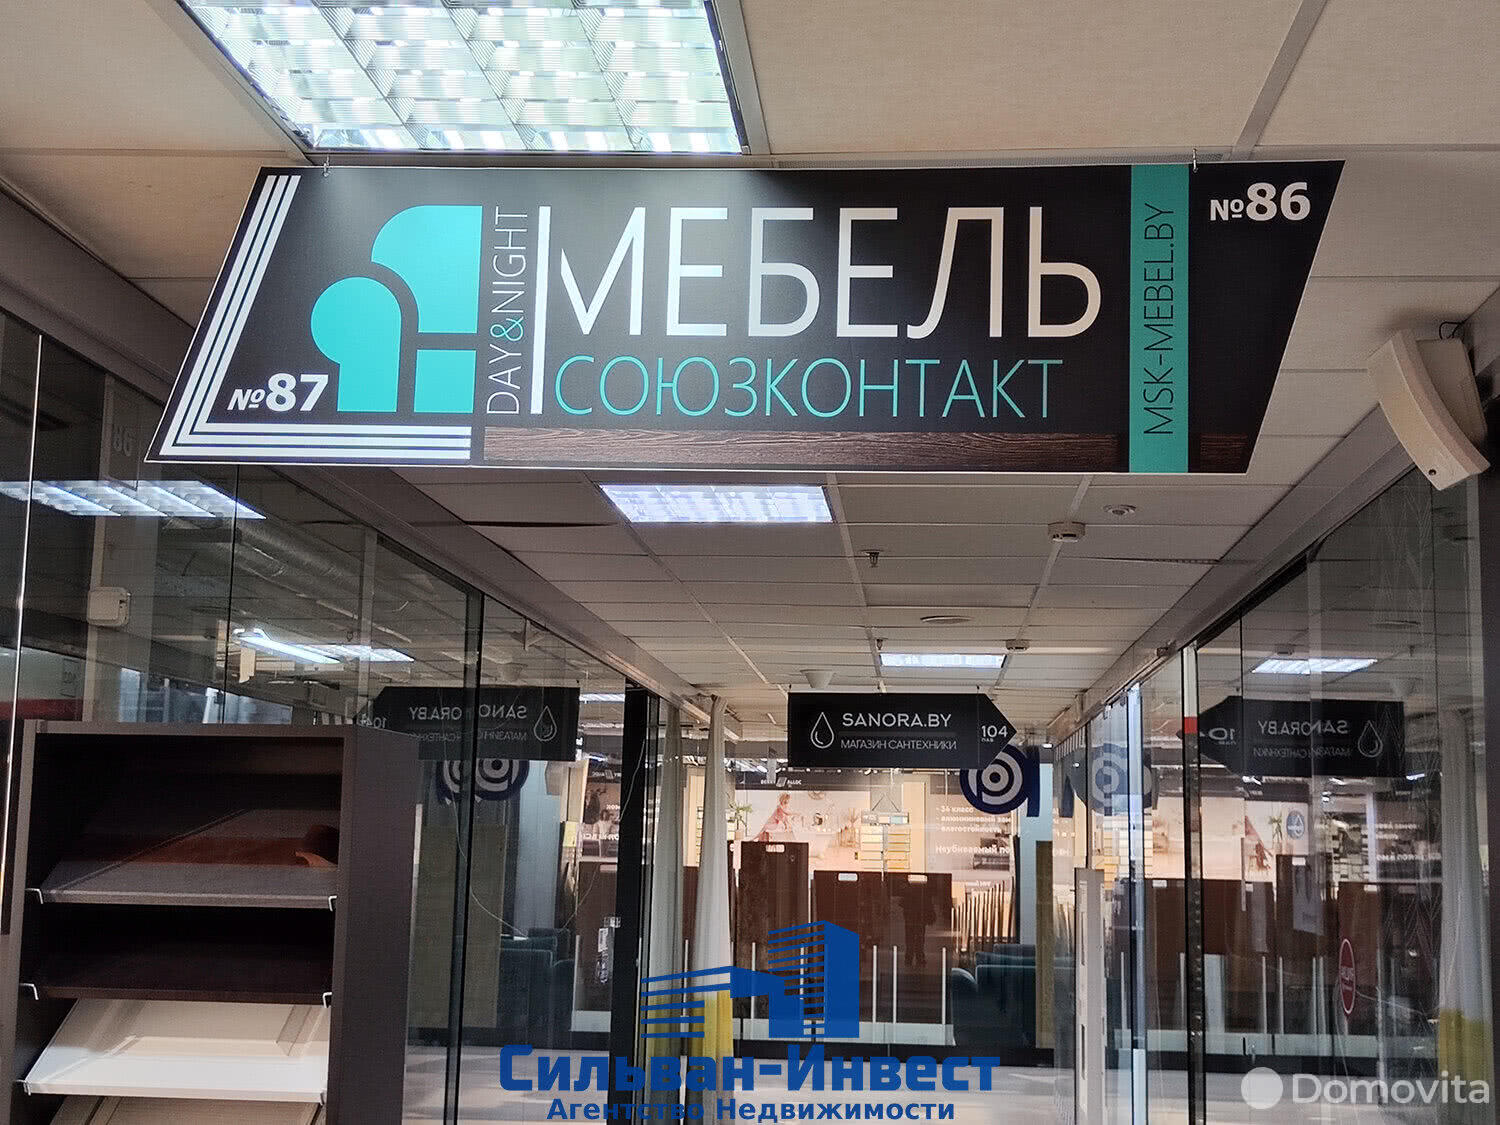 Продажа торгового помещения на ул. Ленина, д. 27 в Минске, 29210USD - фото 6